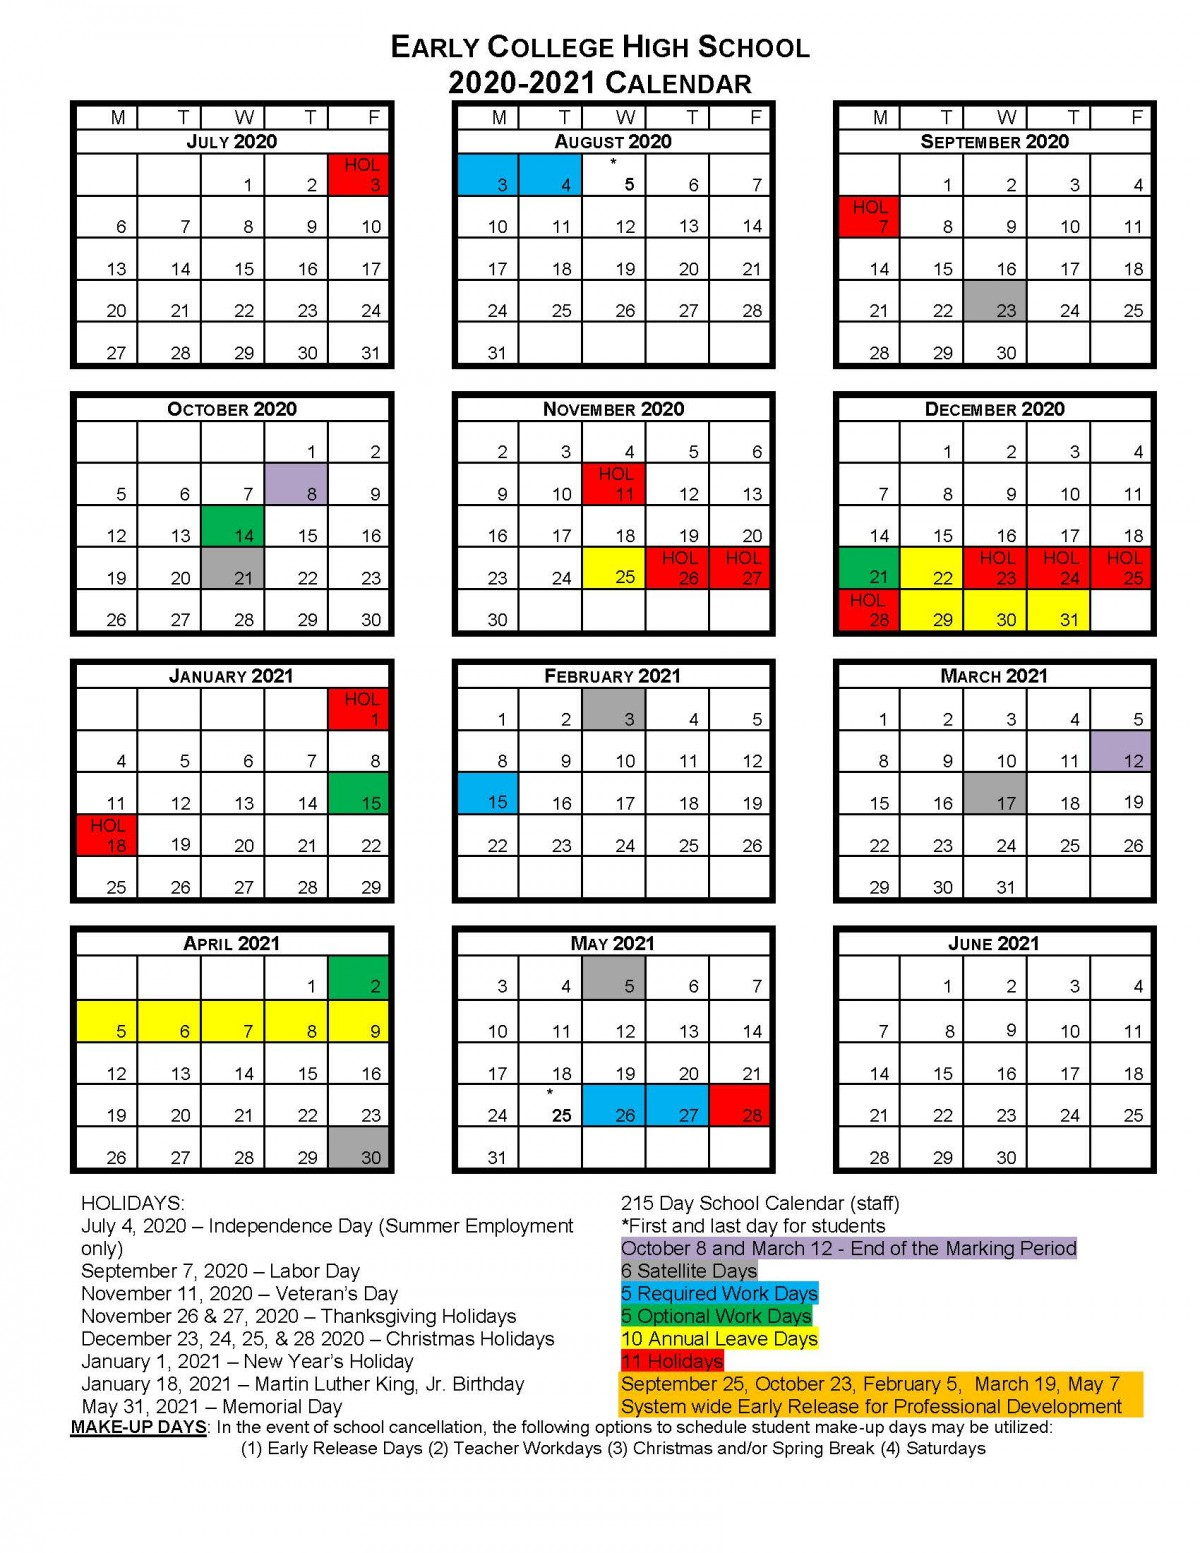 Henry County School Calendar 2022 16 2023 Schoolcalendars